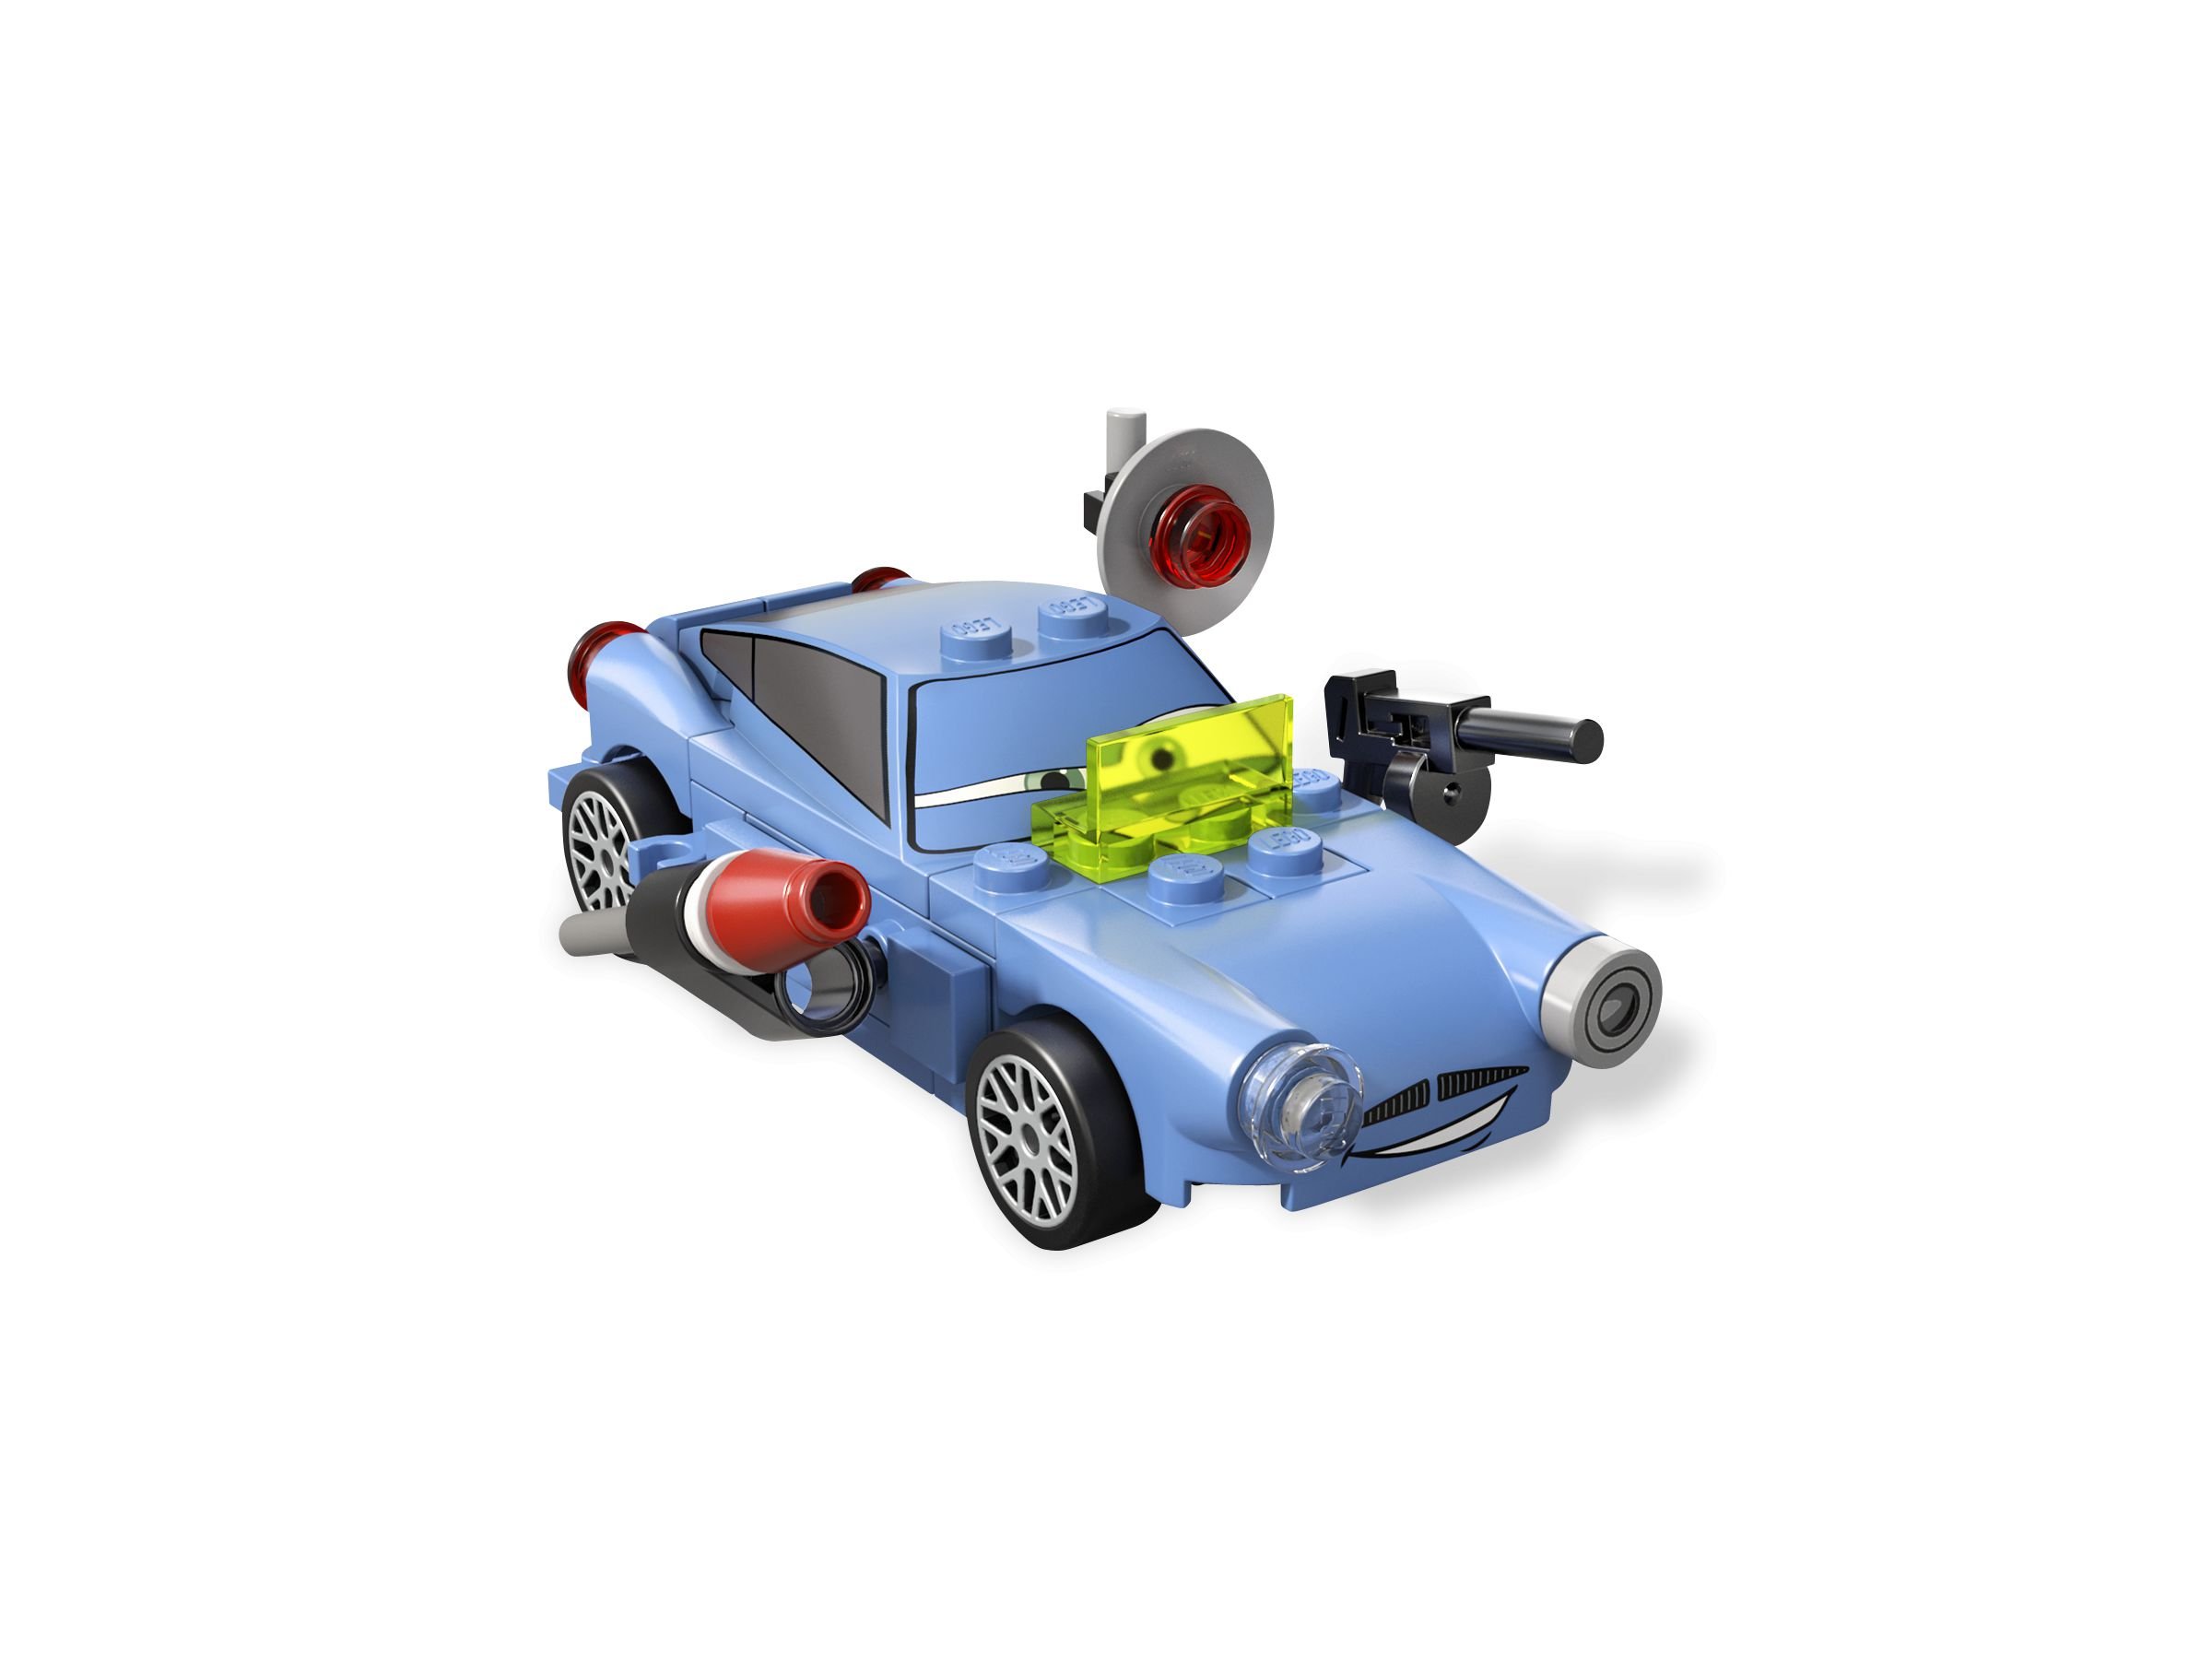 LEGO Cars 9480 Finn McMissile LEGO_9480_alt2.jpg